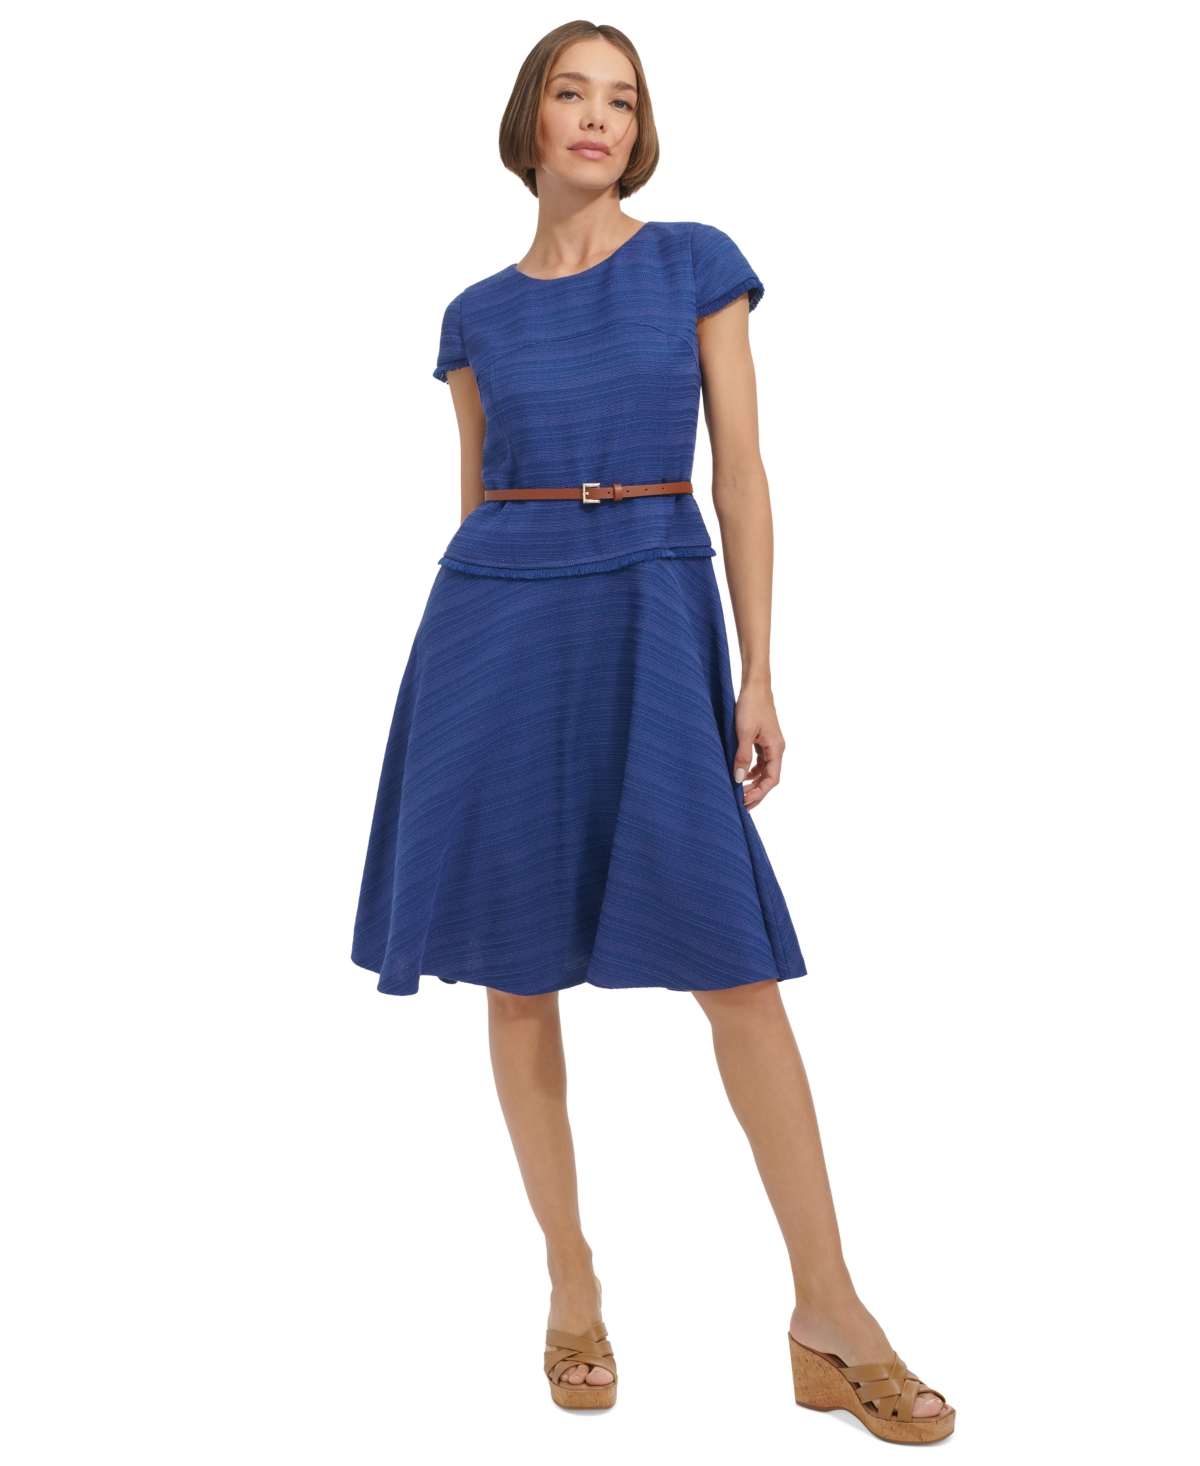 Women's Belted Cap-Sleeve Fit & Flare Dress - Gulf Blue